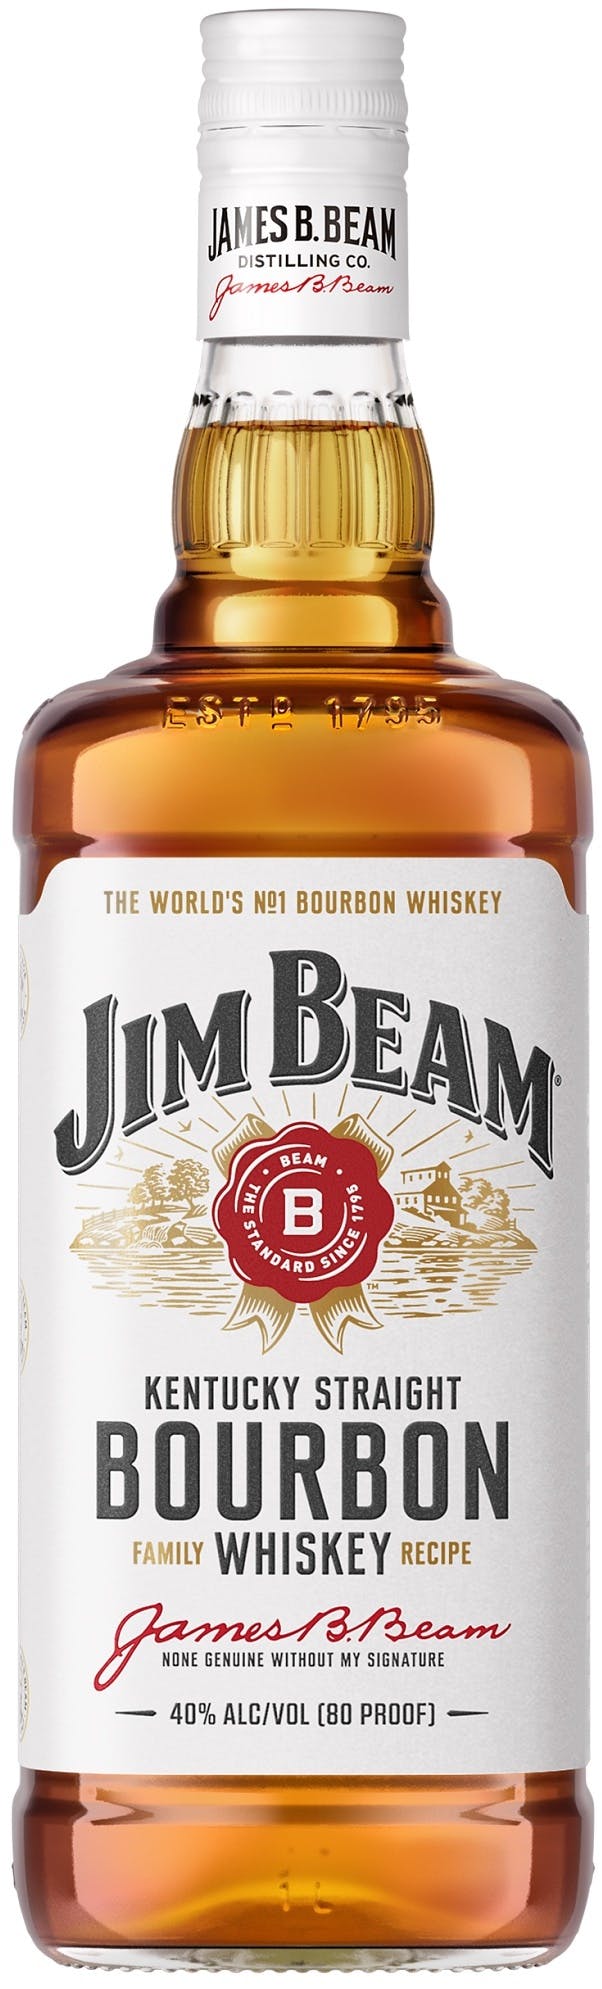 Jim Beam Kentucky Straight Bourbon 1L 4 Whiskey - old Morton year Williams